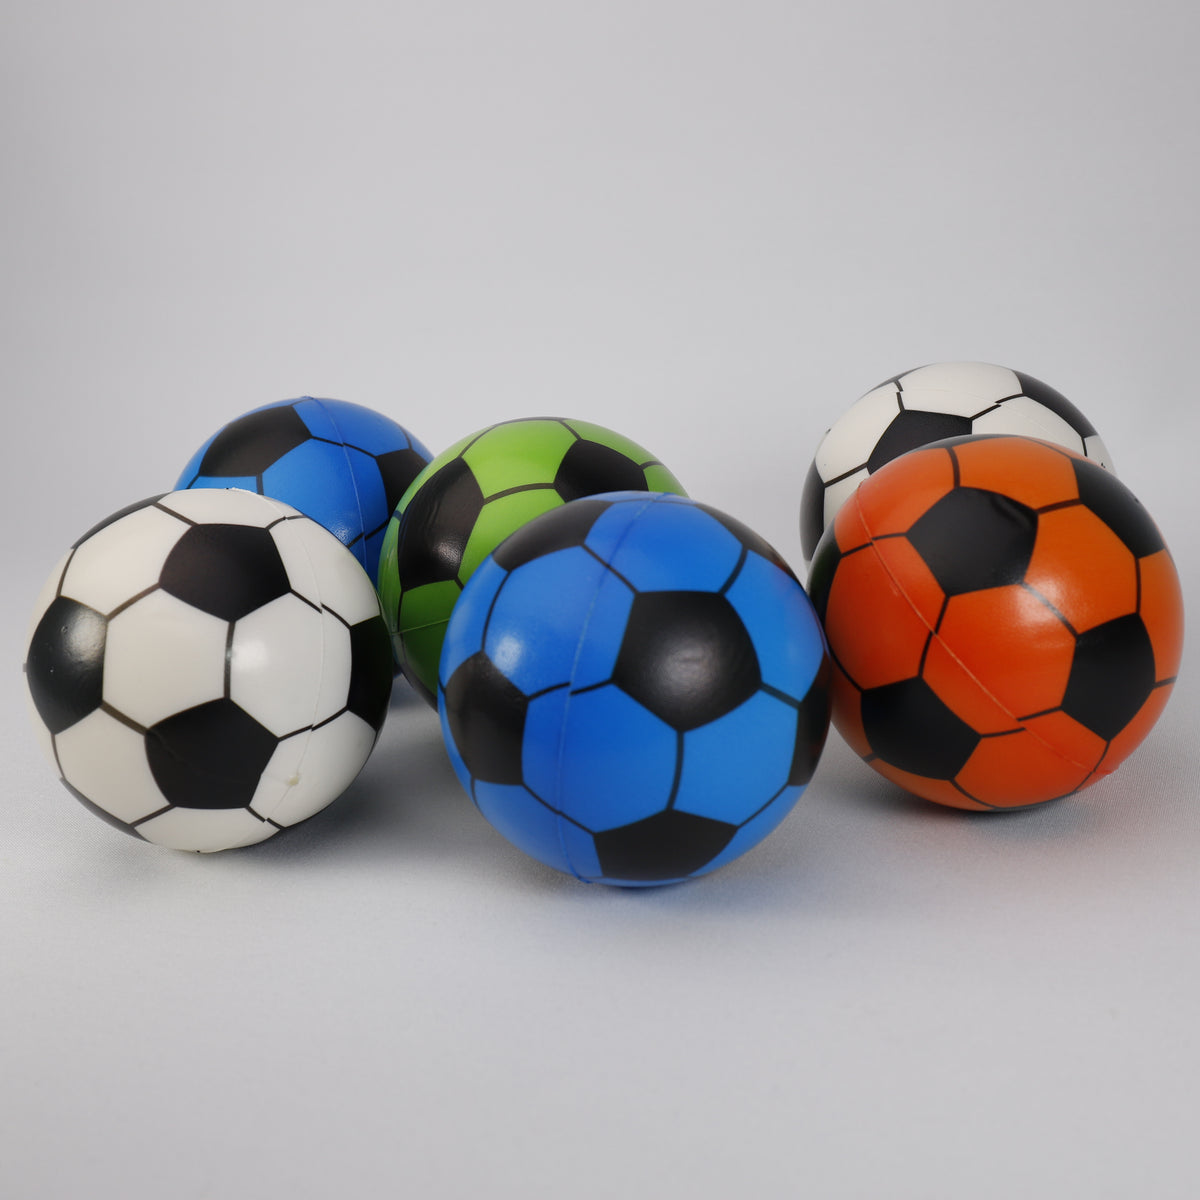 Schaumstoffball Softball Schaumball Spielball mit Fußball Form für 6stk 